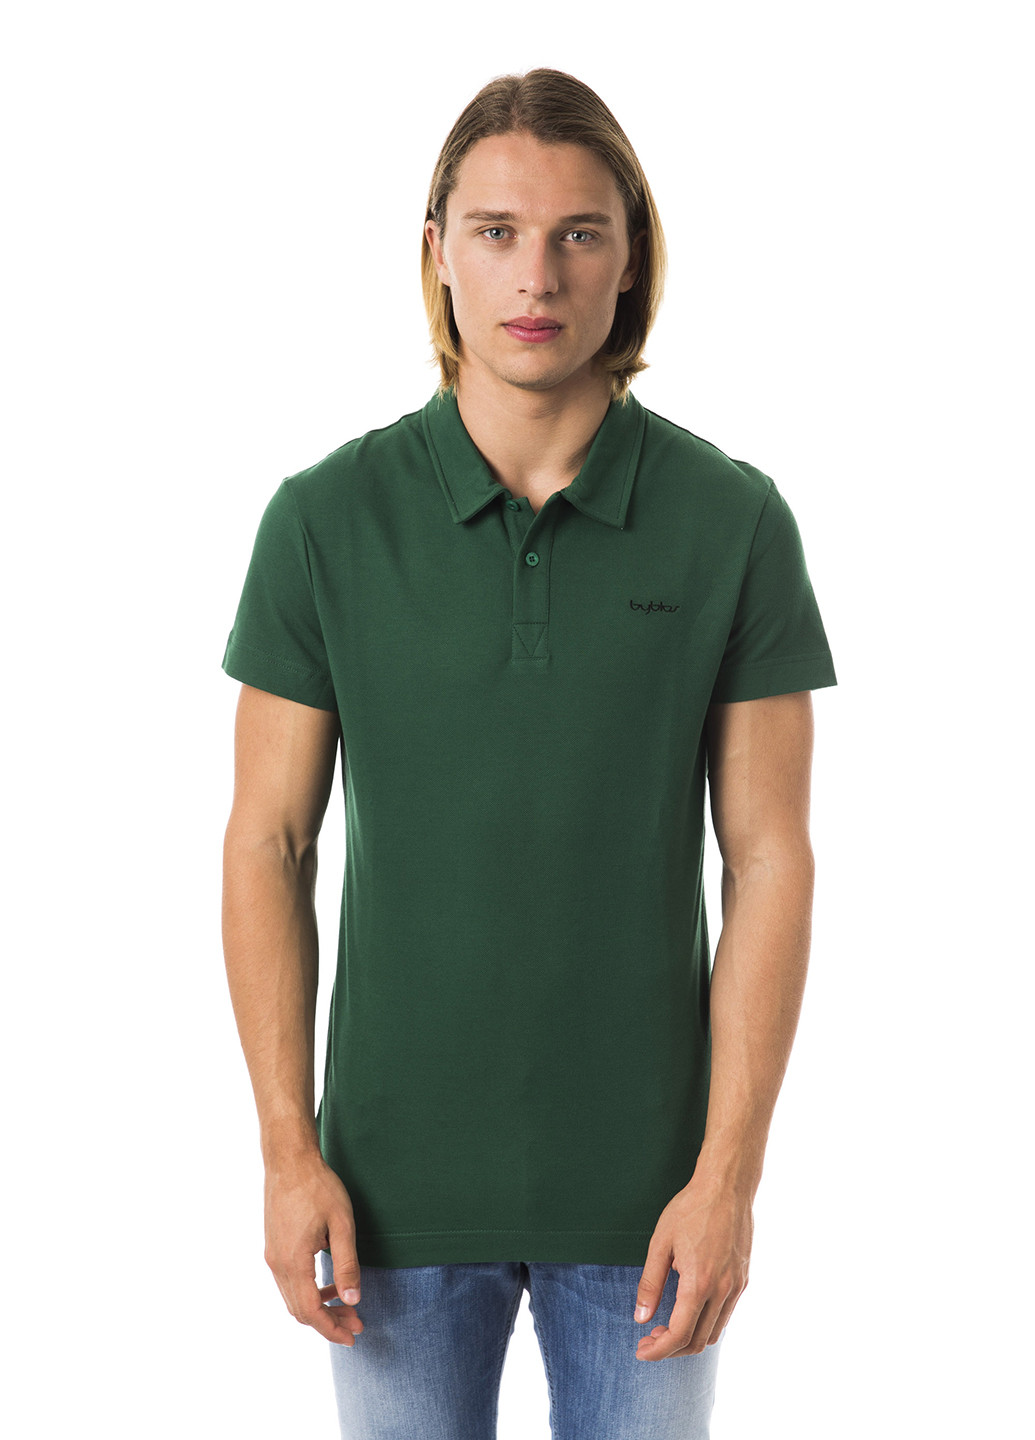 Темно-зеленая футболка-поло для мужчин Byblos с логотипом